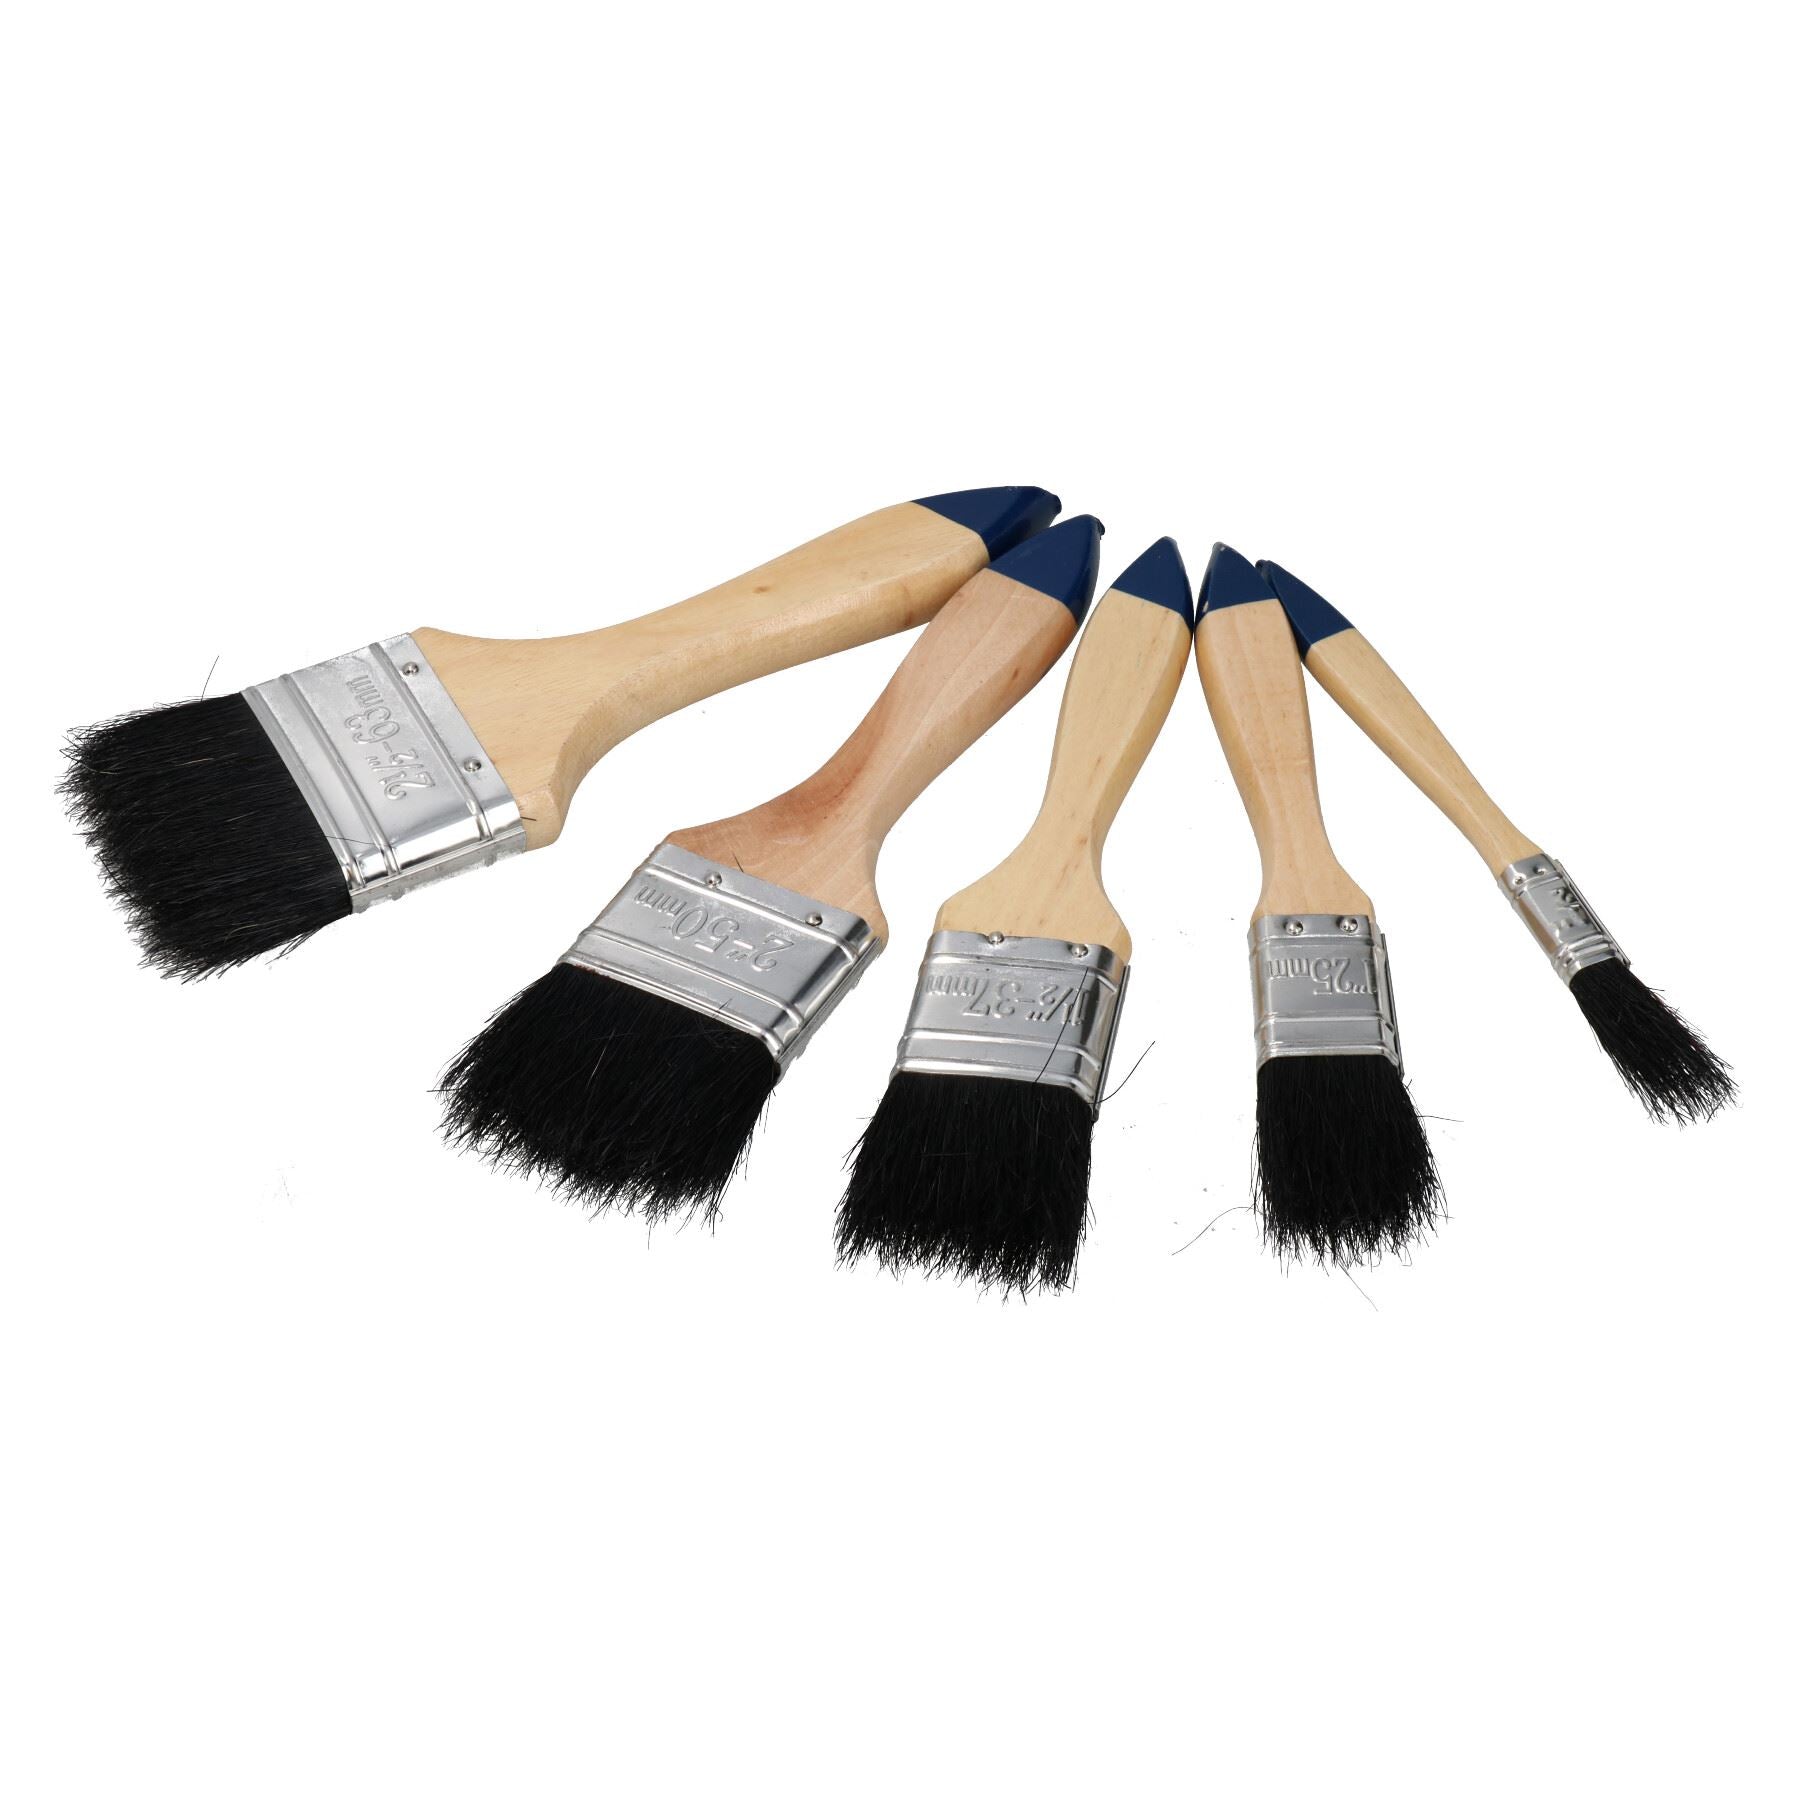 5pc Paint Brush Set Painters and Decorators Decorating Brush 12 – 62mm Width